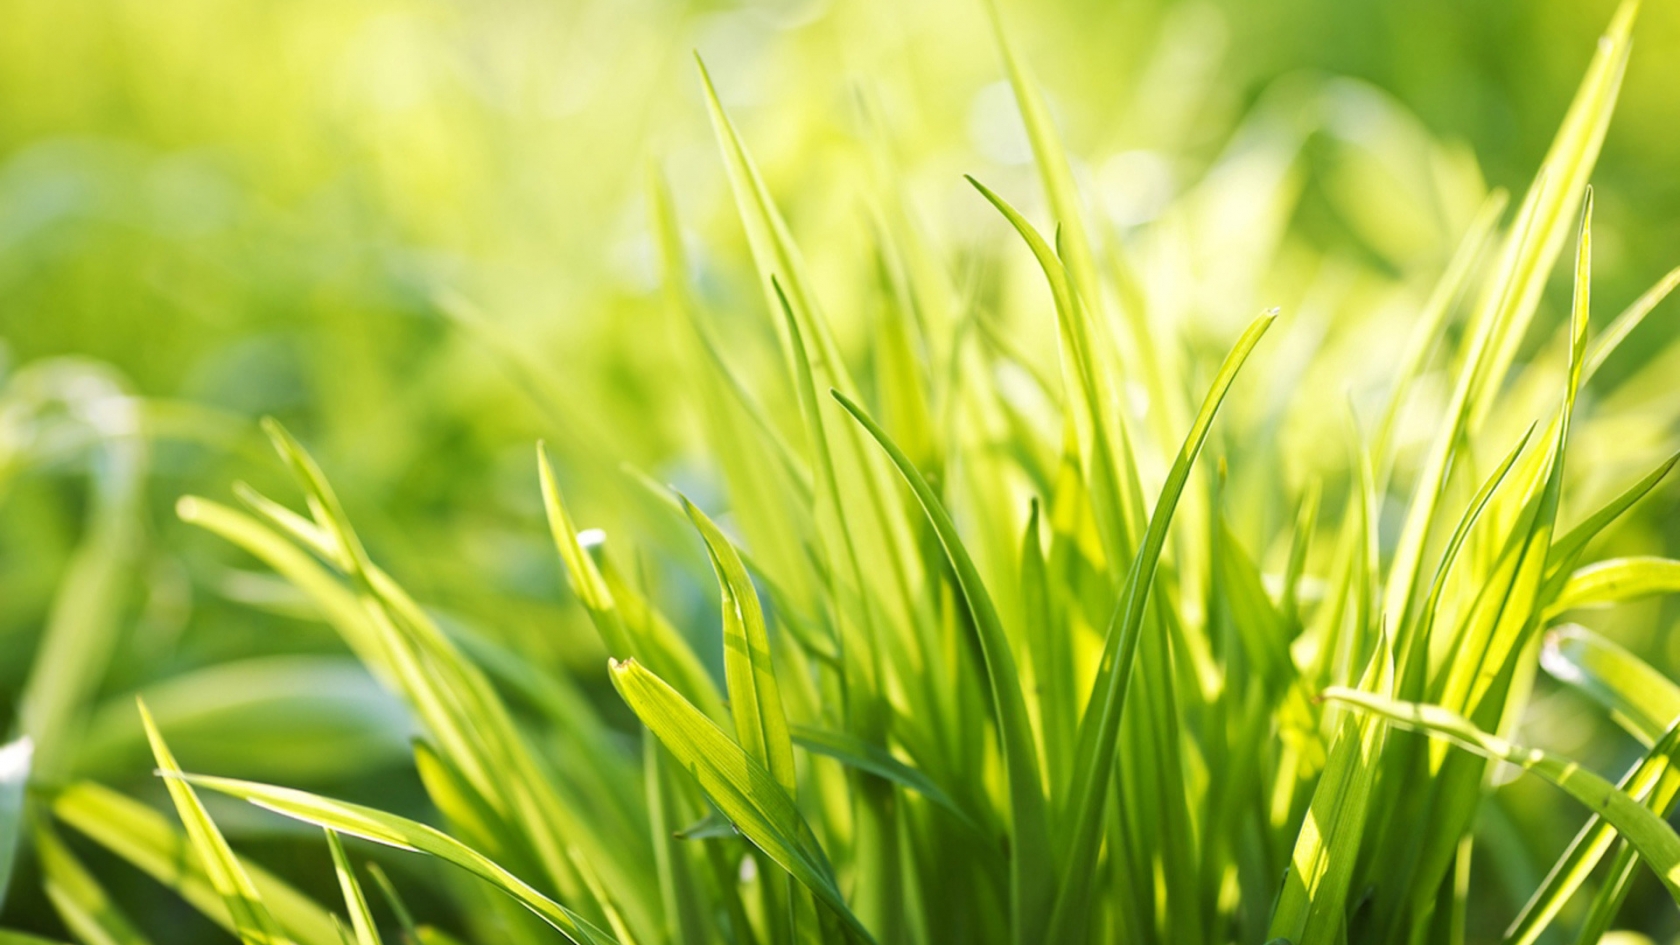 Ever Green Grass for 1680 x 945 HDTV resolution